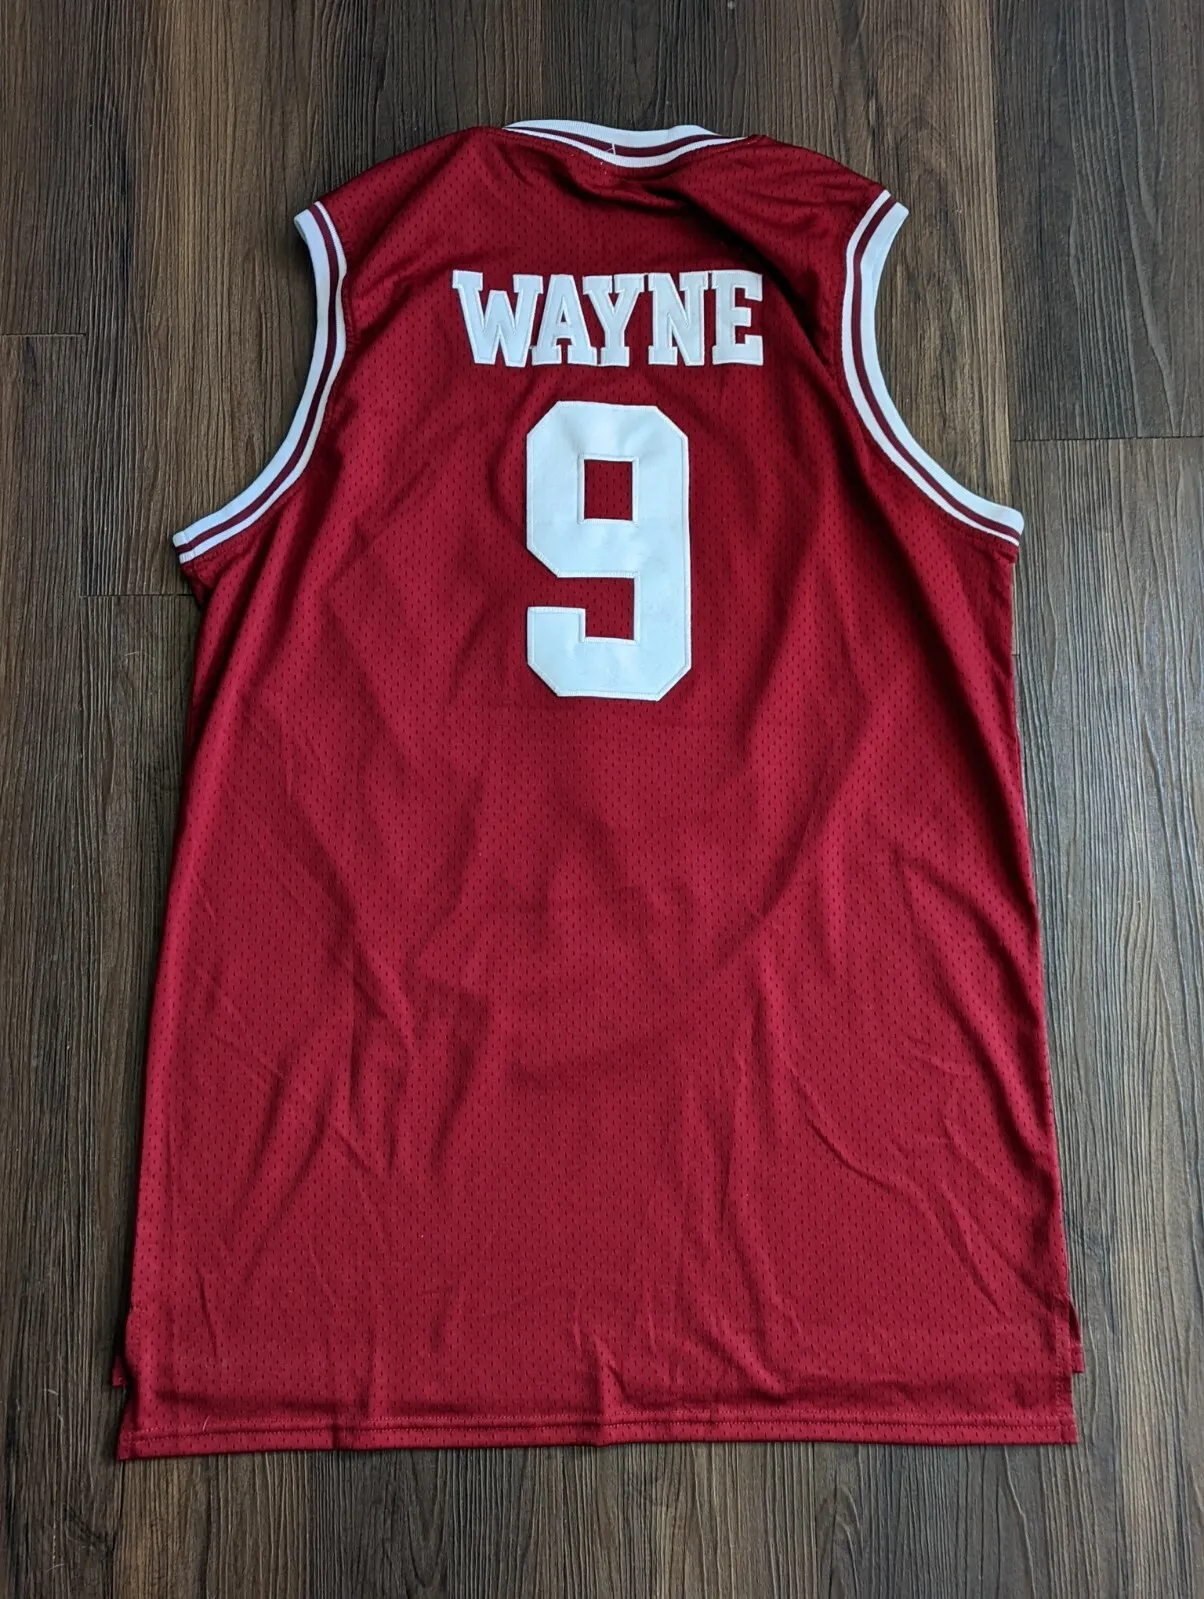 Dwayne Wayne Hillman College Basketball Jersey  Size Xl Different World